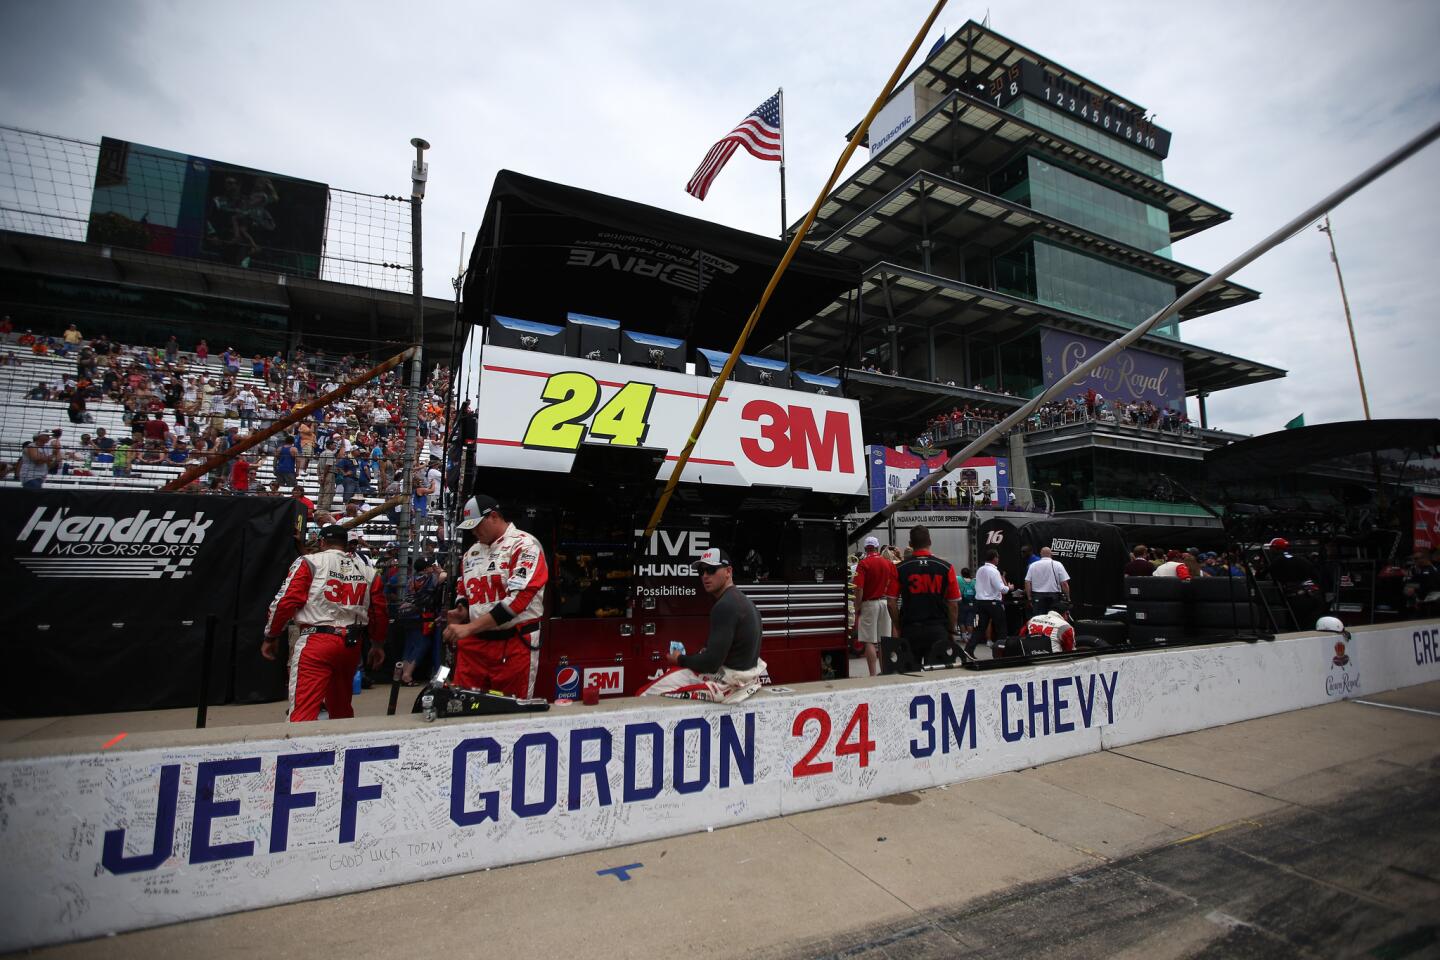 Jeff Gordon through the years: Jeff Kyle 400 at the Brickyard